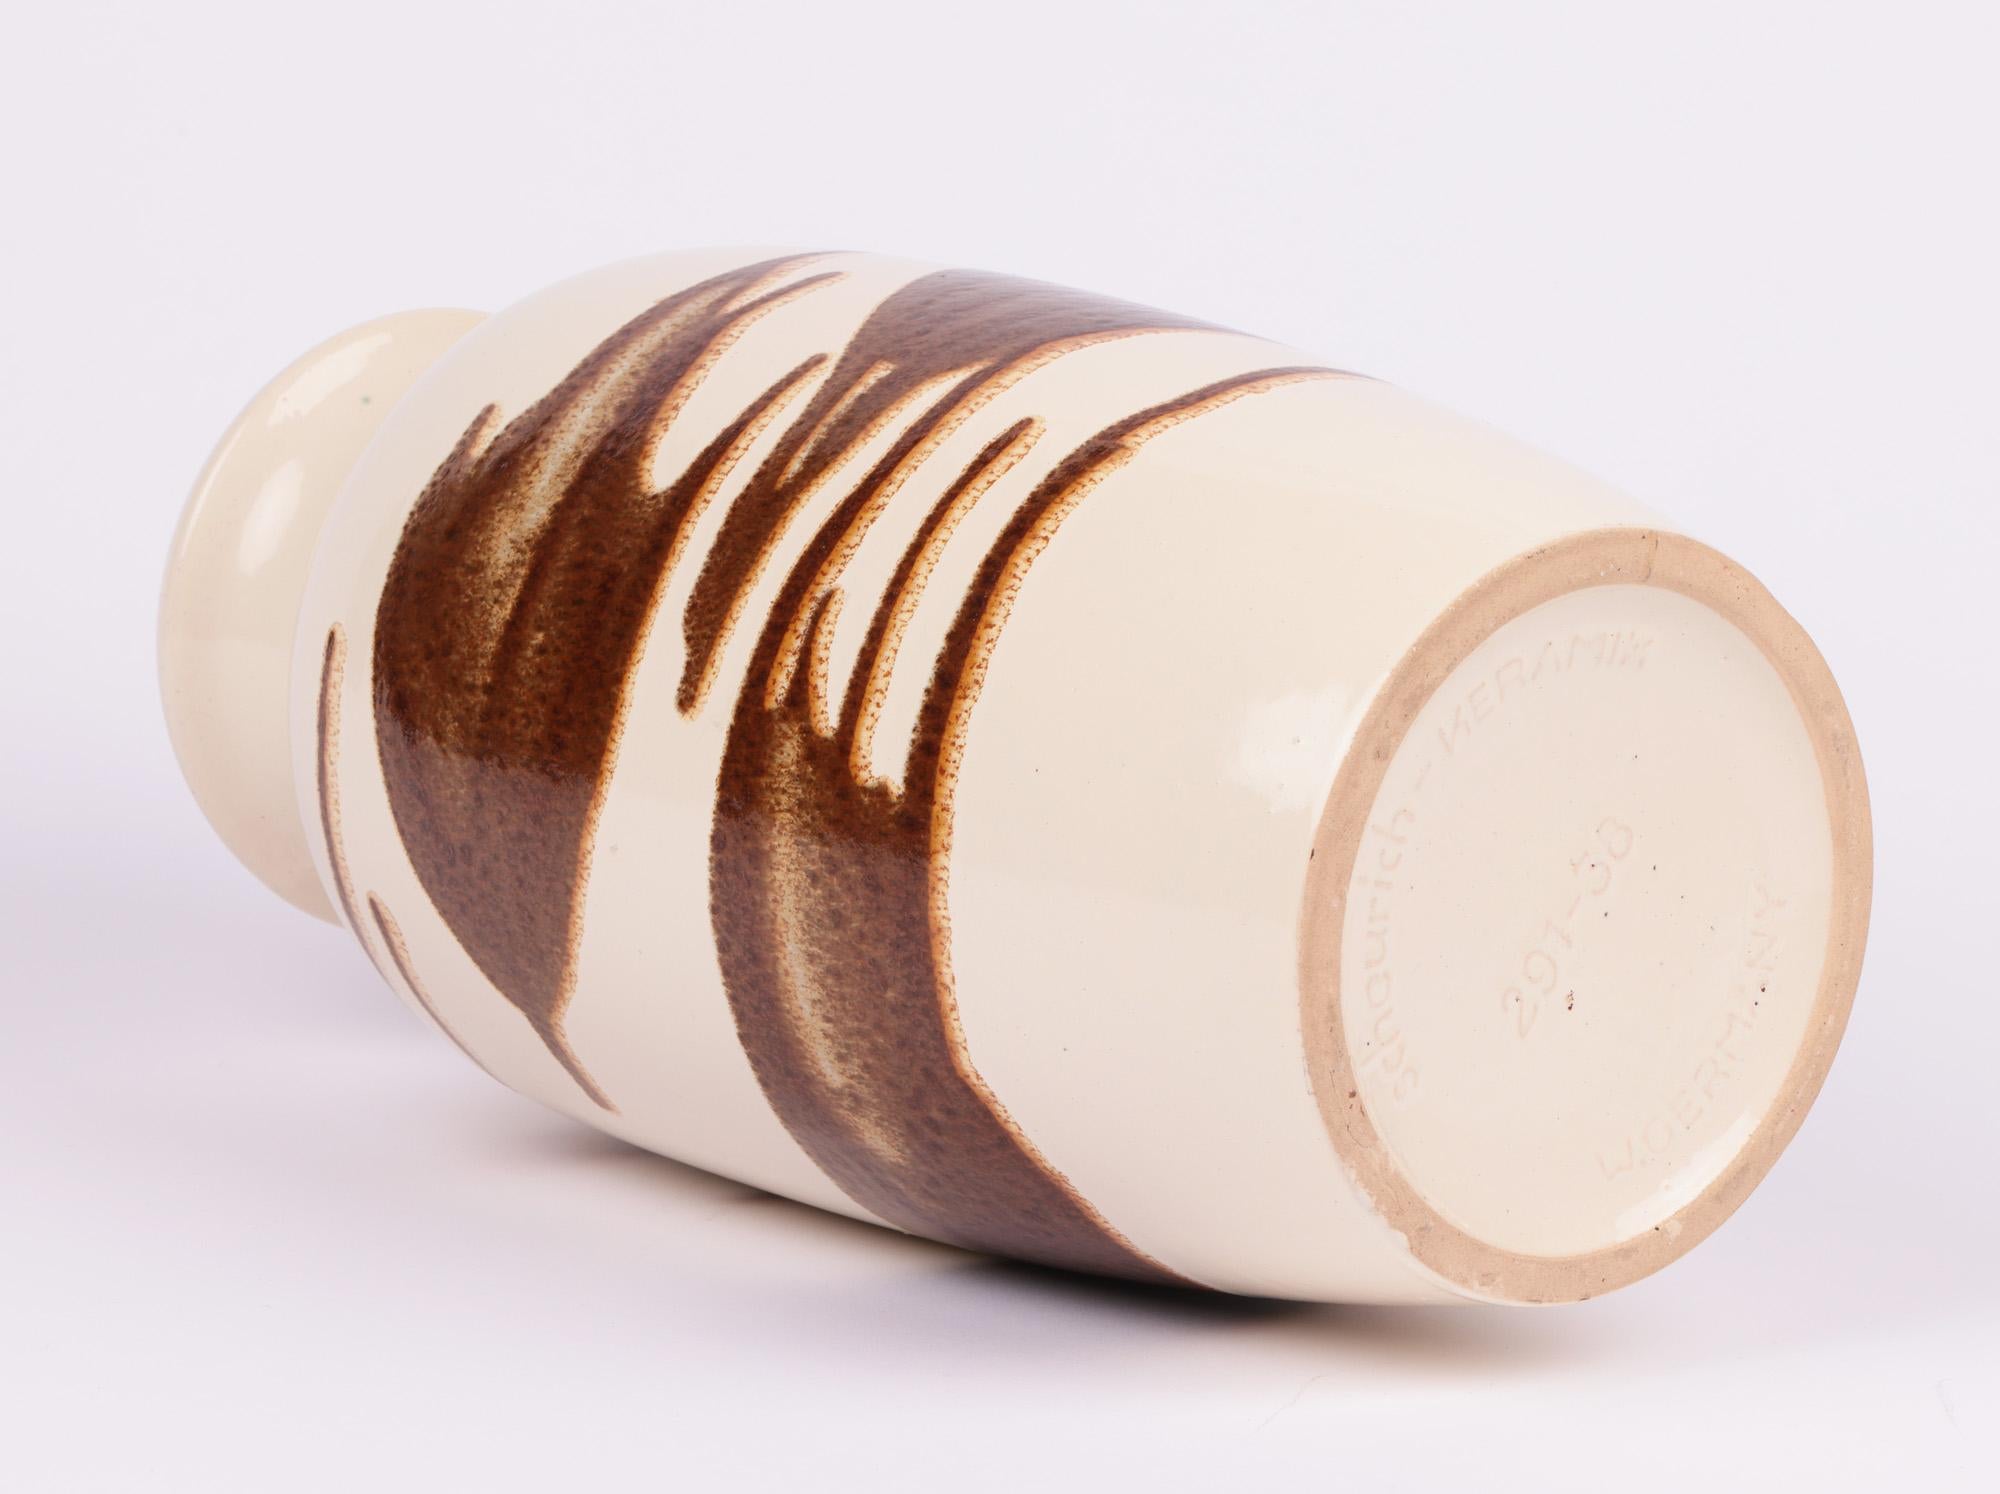 Scheurich Keramik Mid-Century Abstract Design Art Pottery Vase For Sale 1